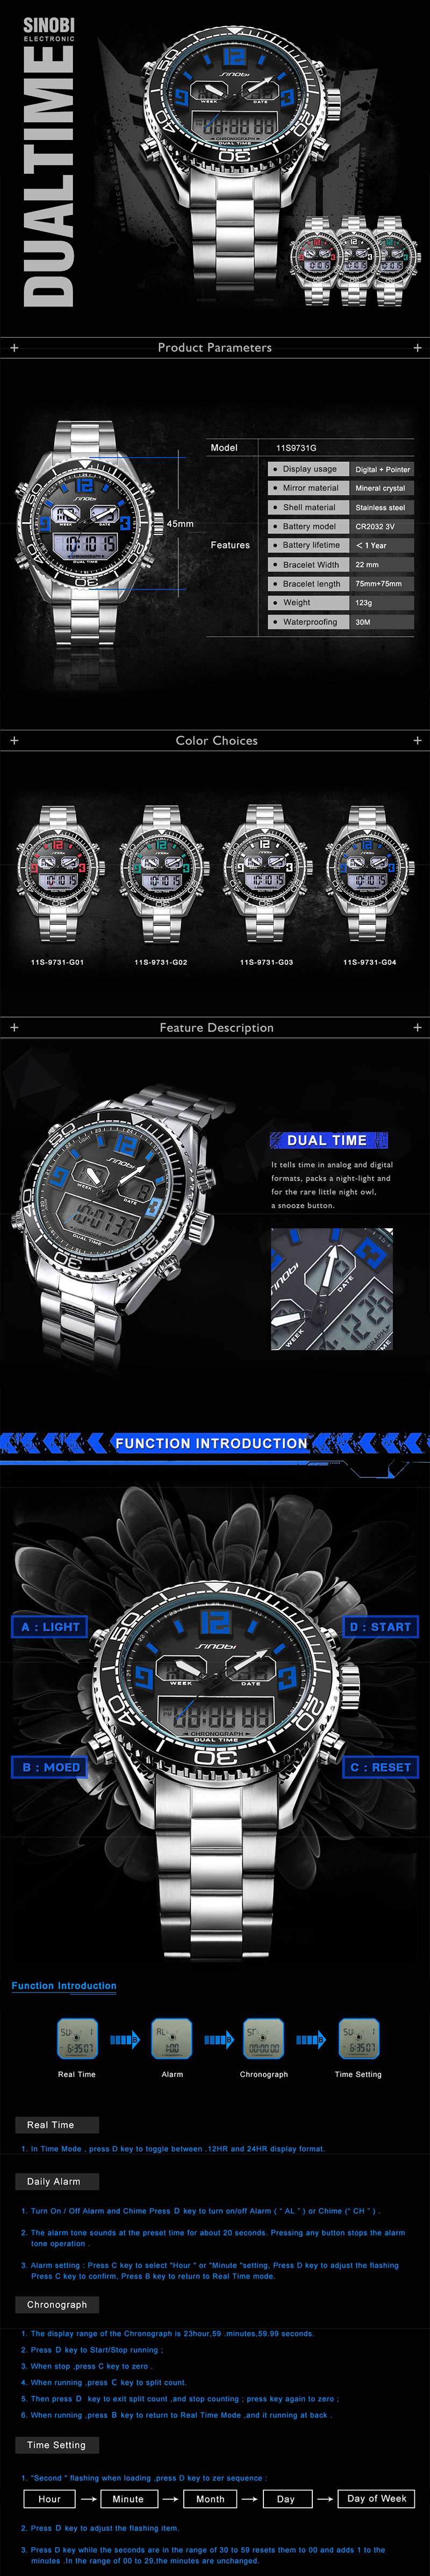 SINOBI-9731-Dual-Display-Digital-Watch-Men-Chronograph-Luminous-Display-Watch-Fashion-Outdoor-Watch-1293383